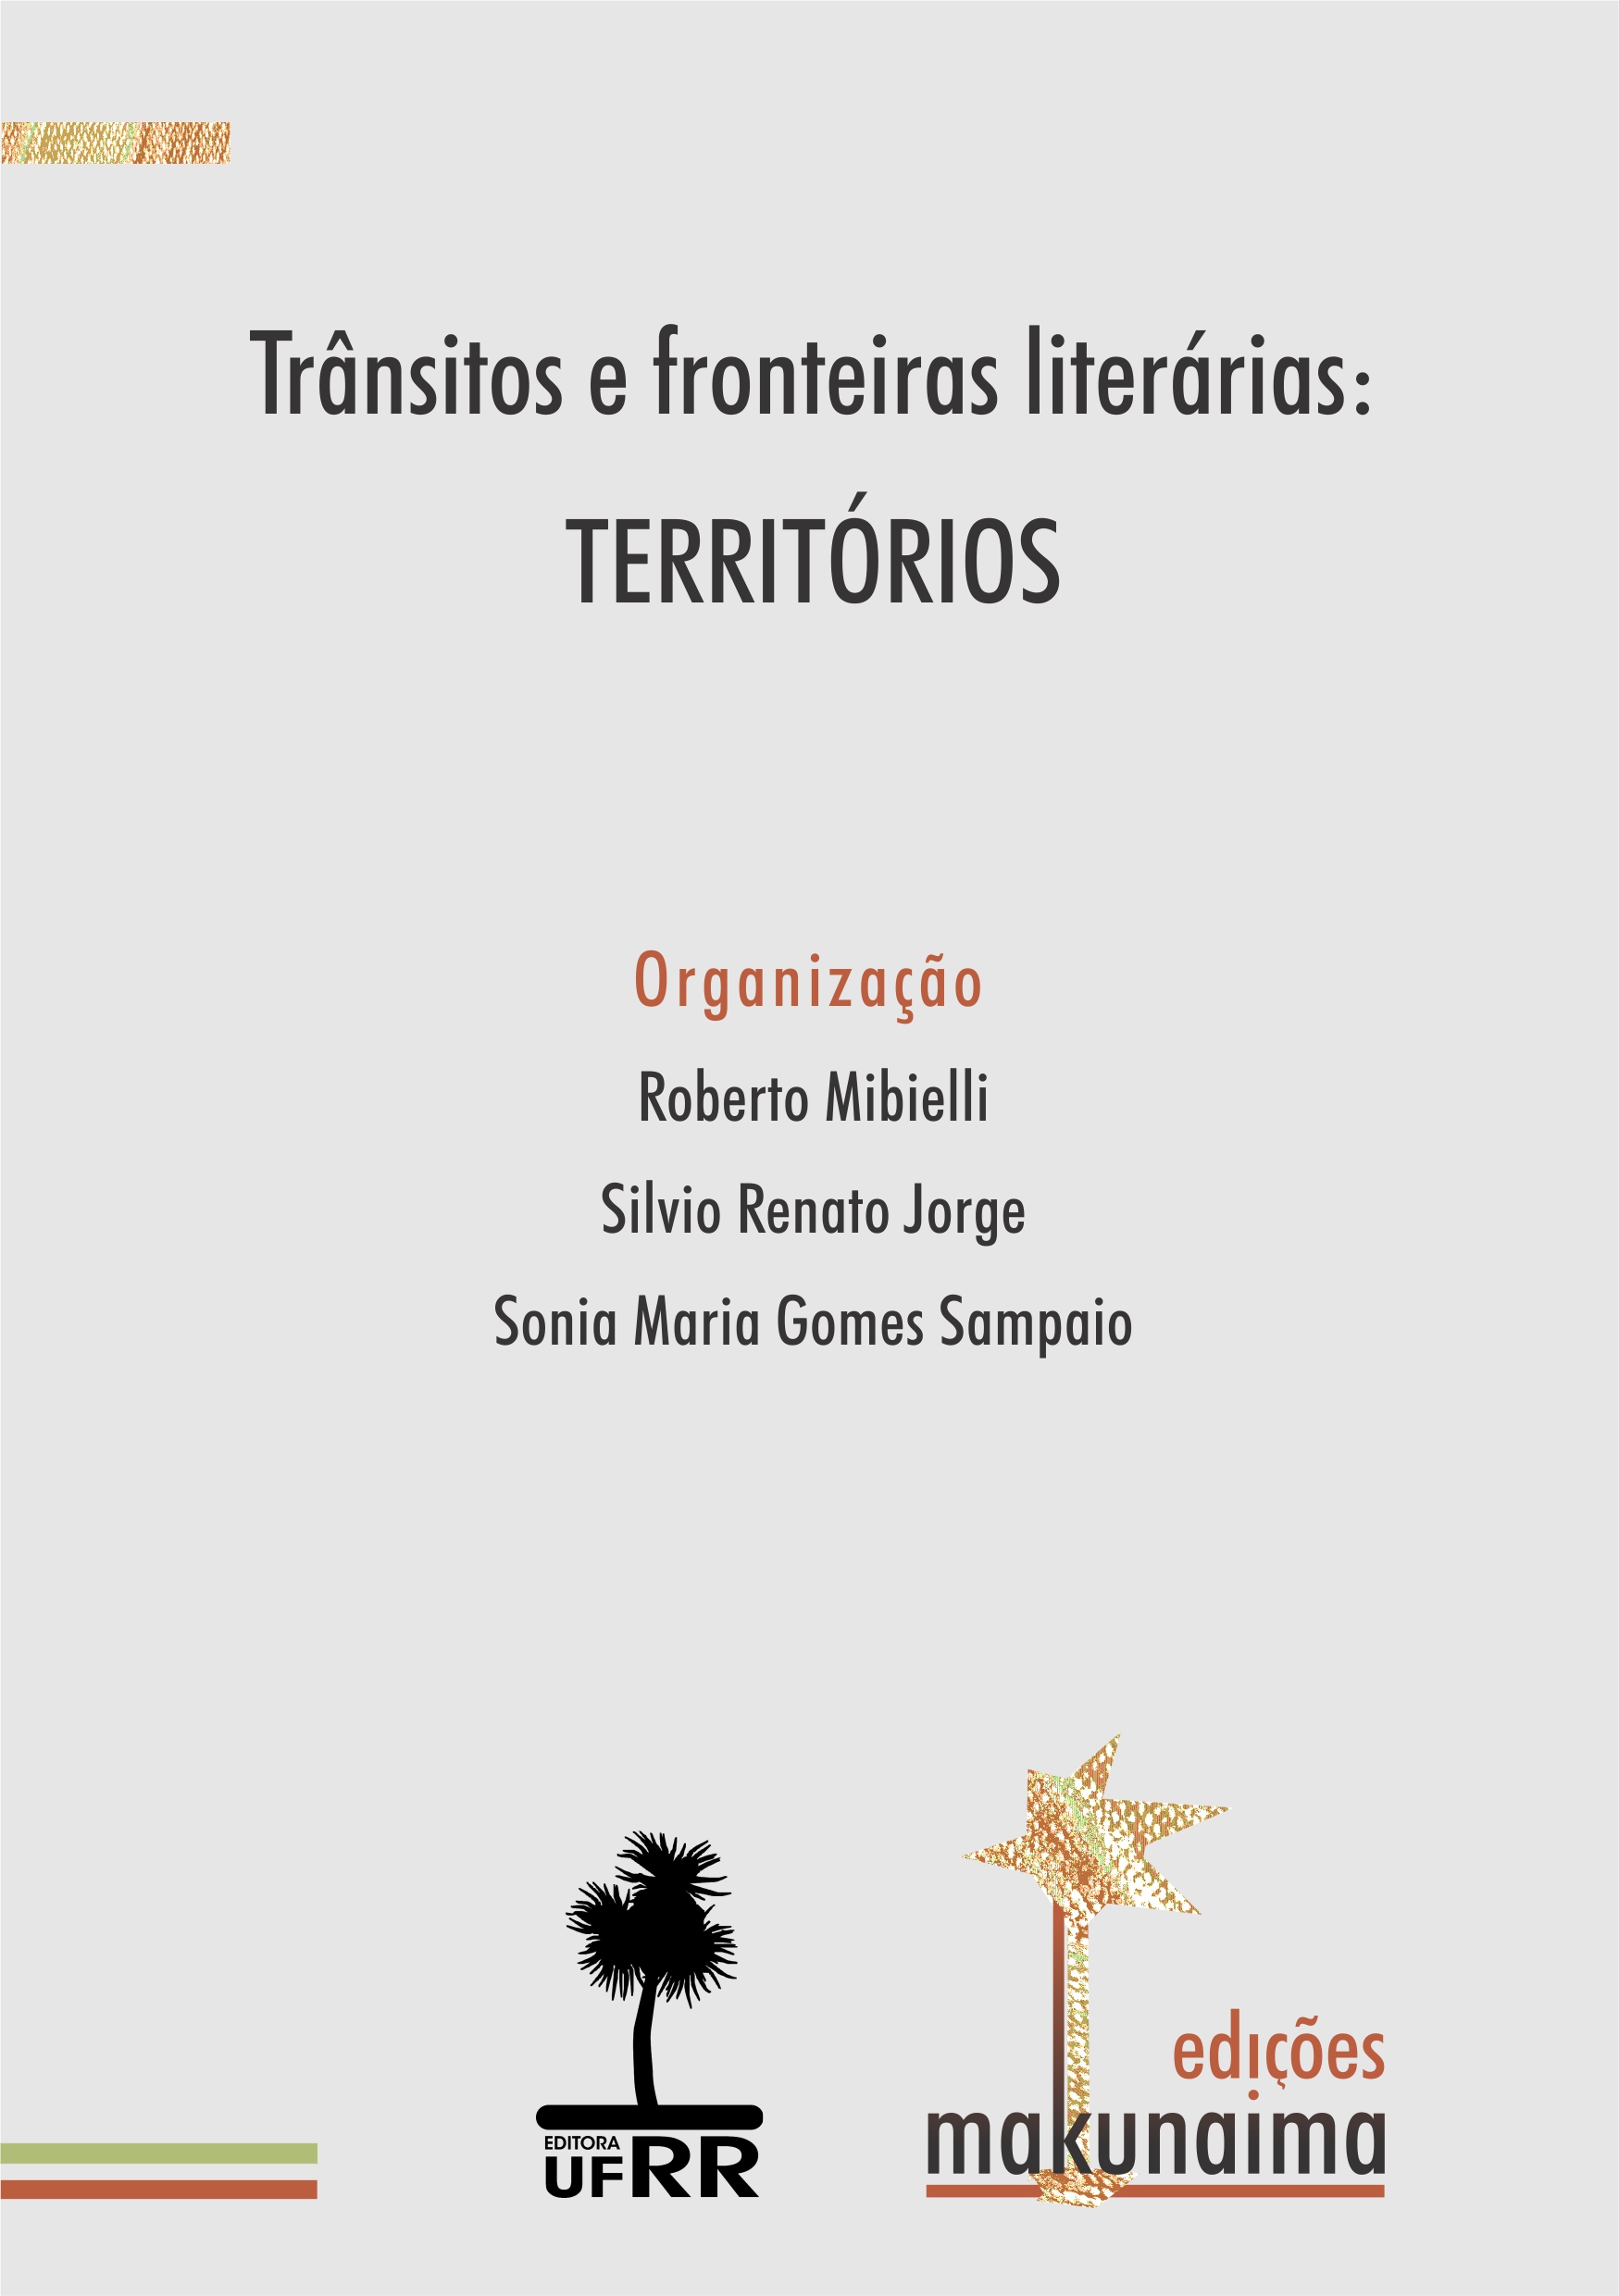 Transitos_e_Fronteiras_Literarias_TERRIT_RIOS_1586100359